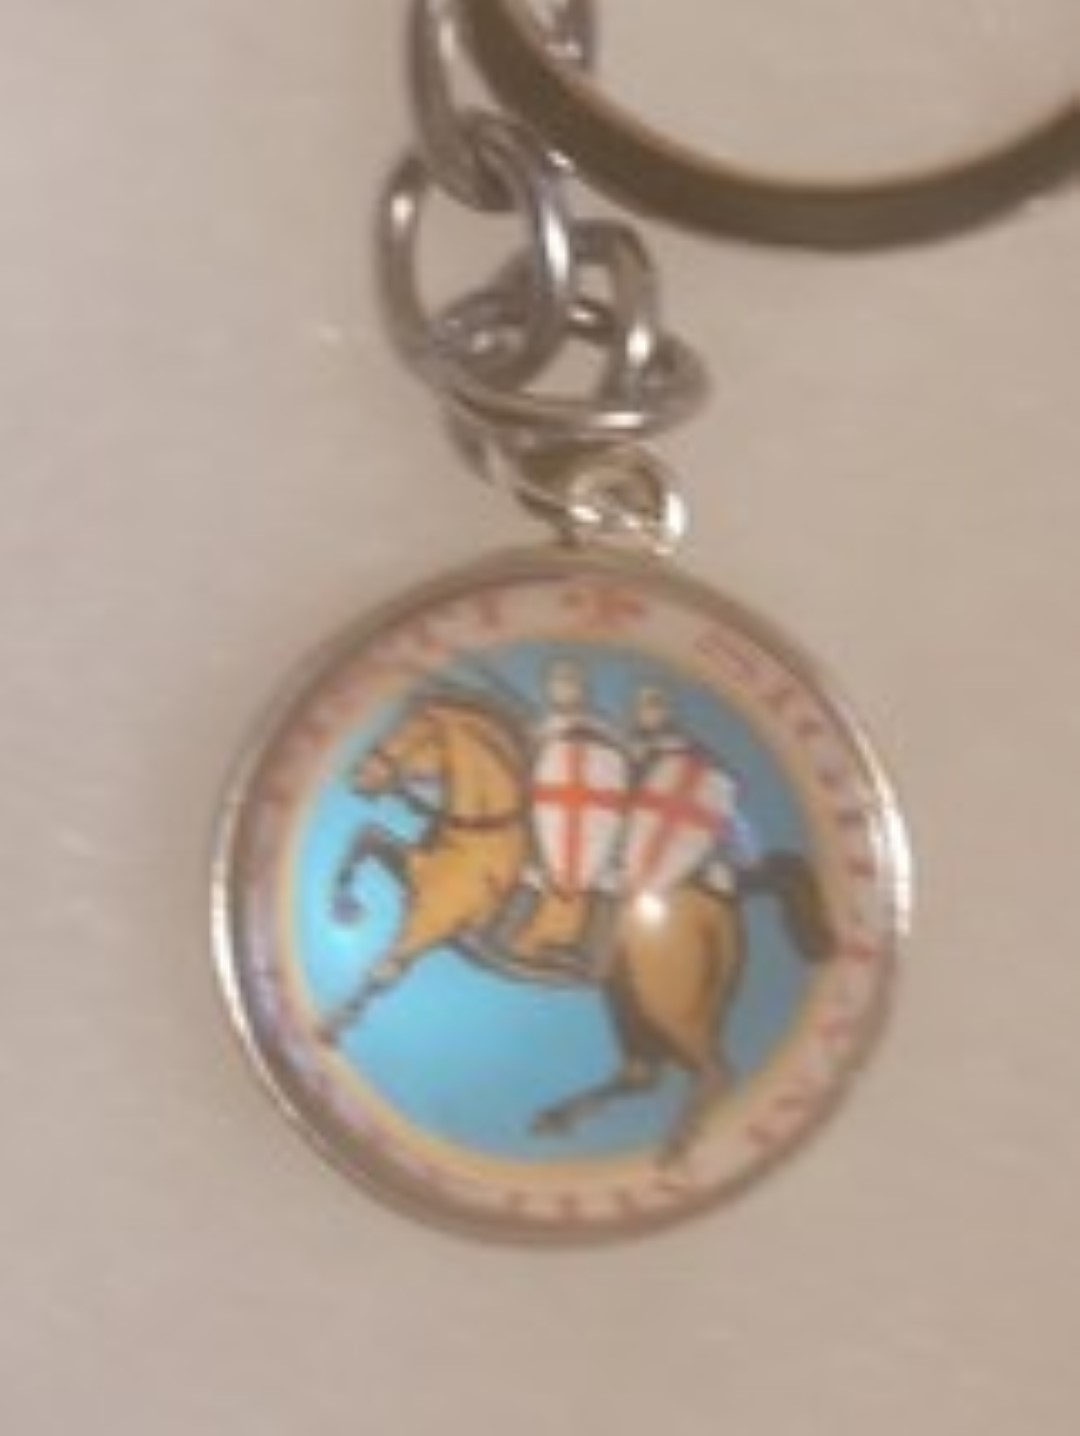 Knights templar classic two knights on horse sky blue circle globe pendant key  large 